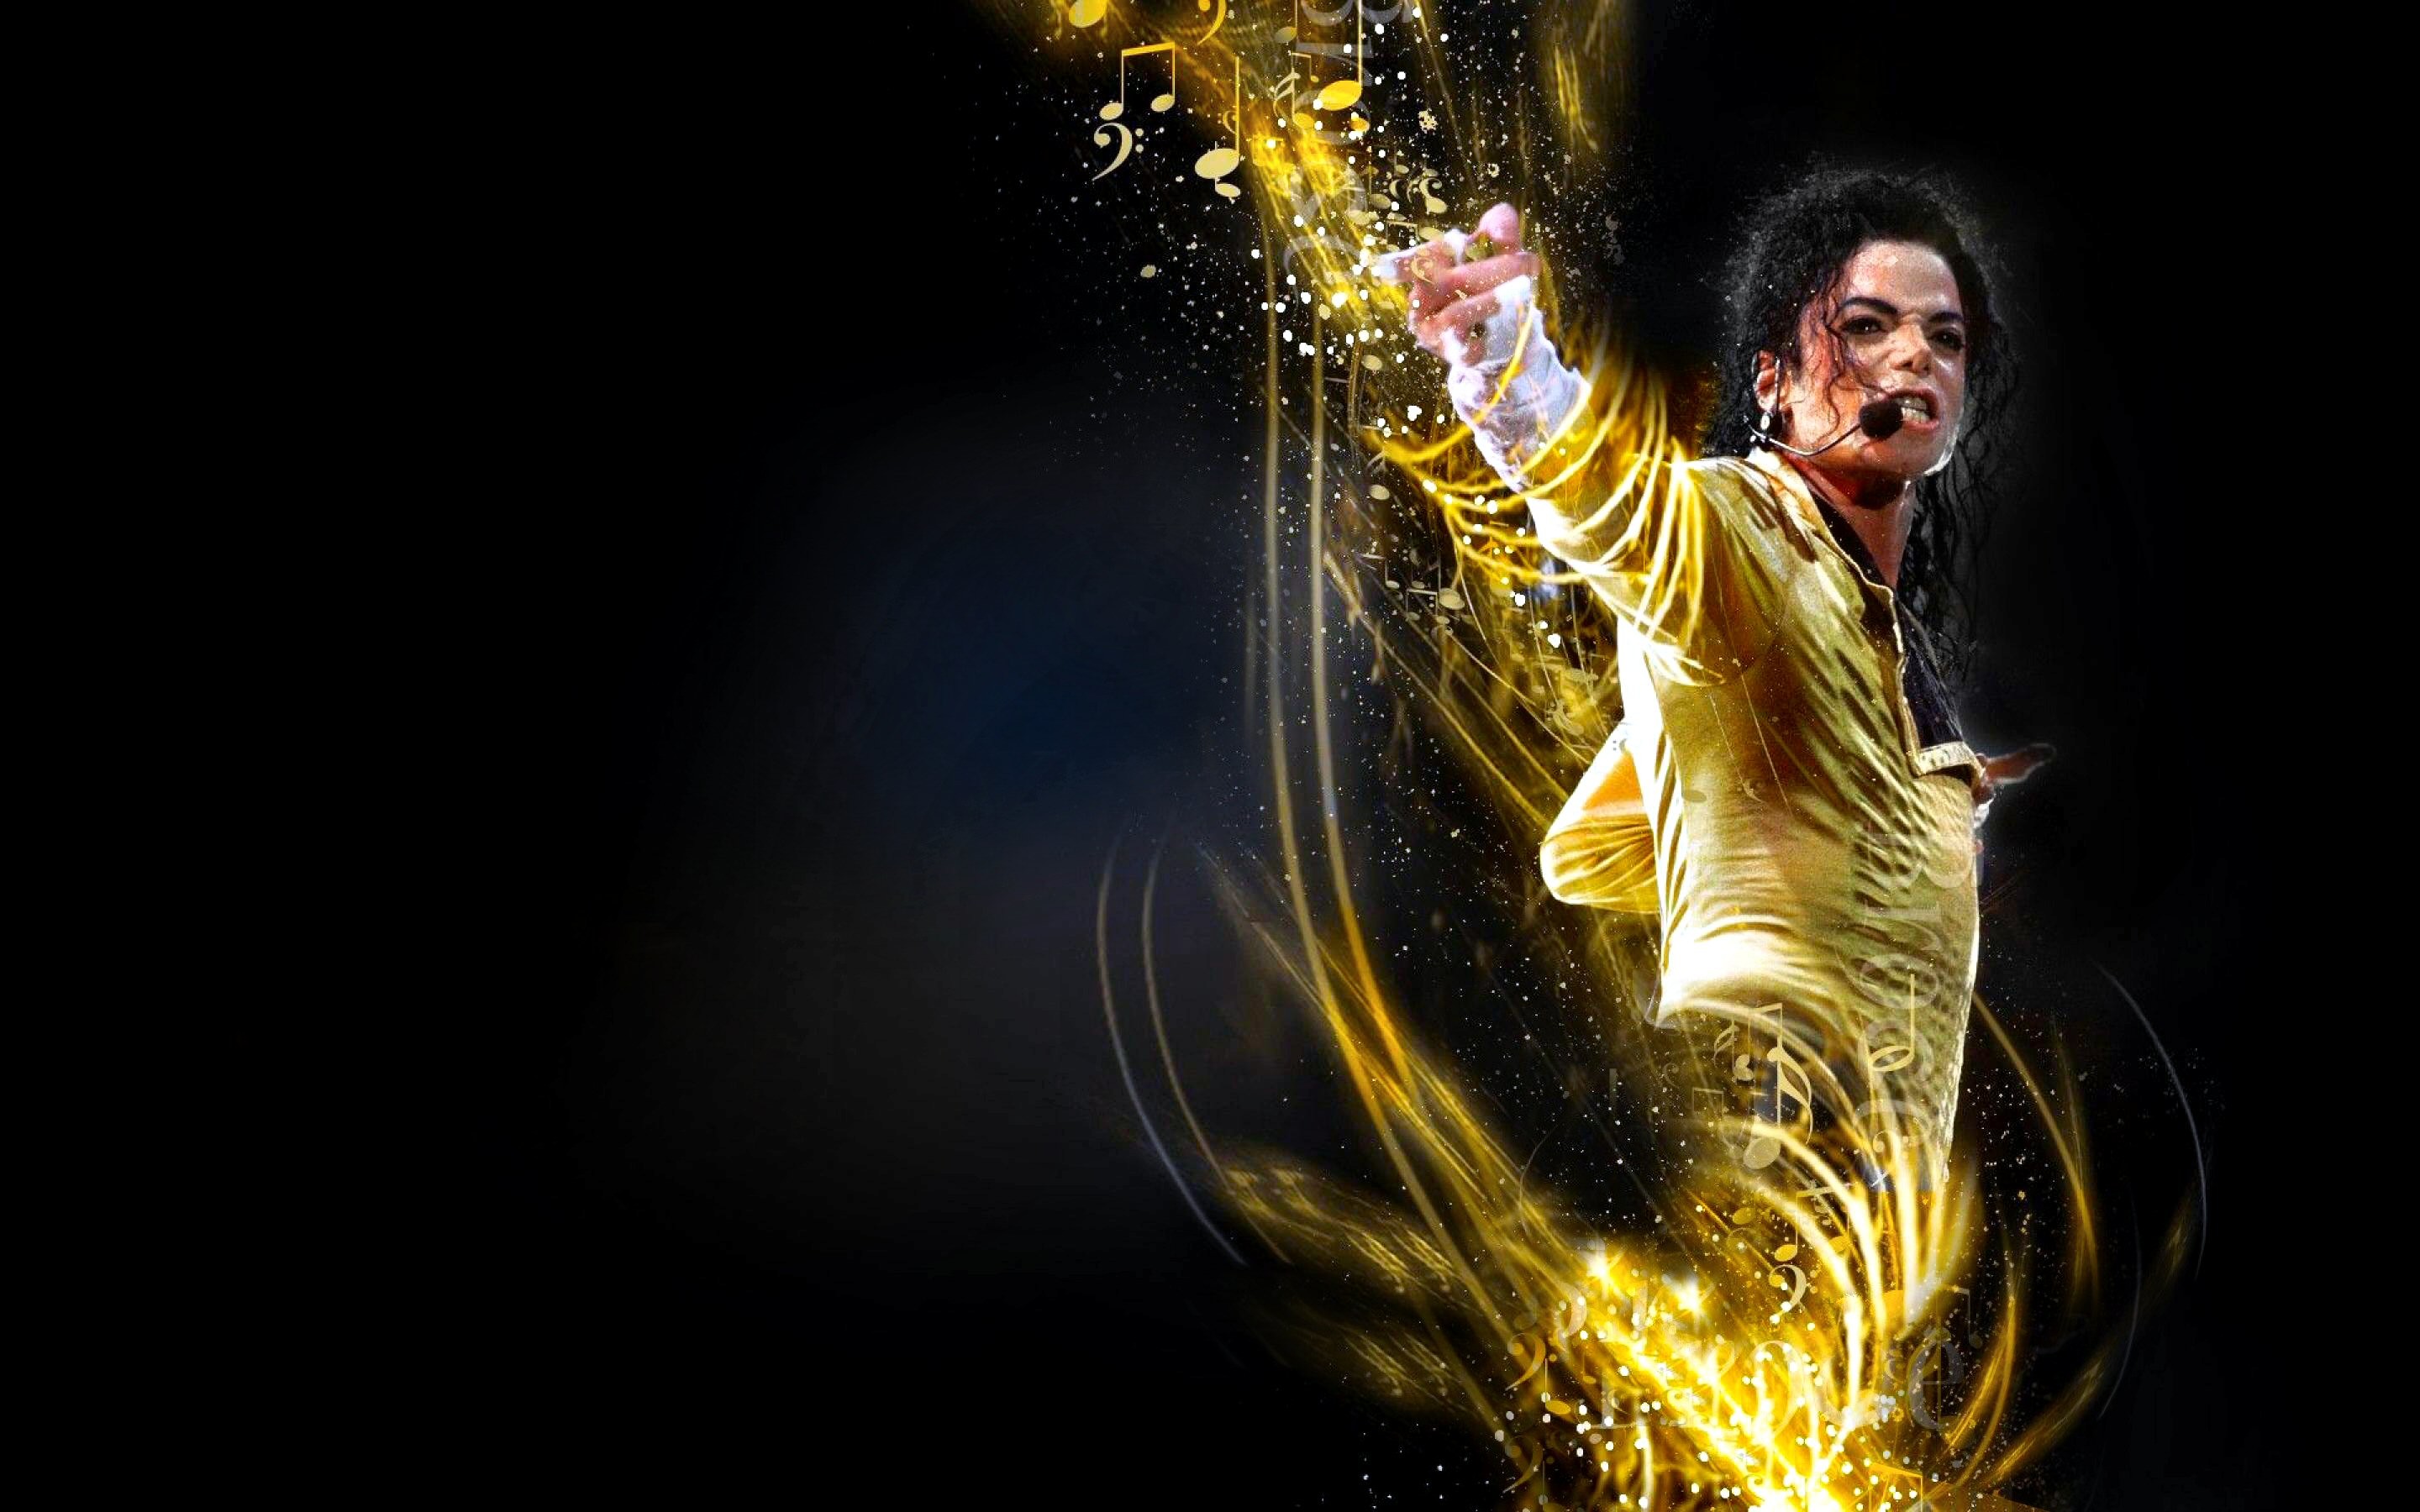 2880x1800 ... Michael Jackson wallpaper by Meggy-MJJ on DeviantArt ...